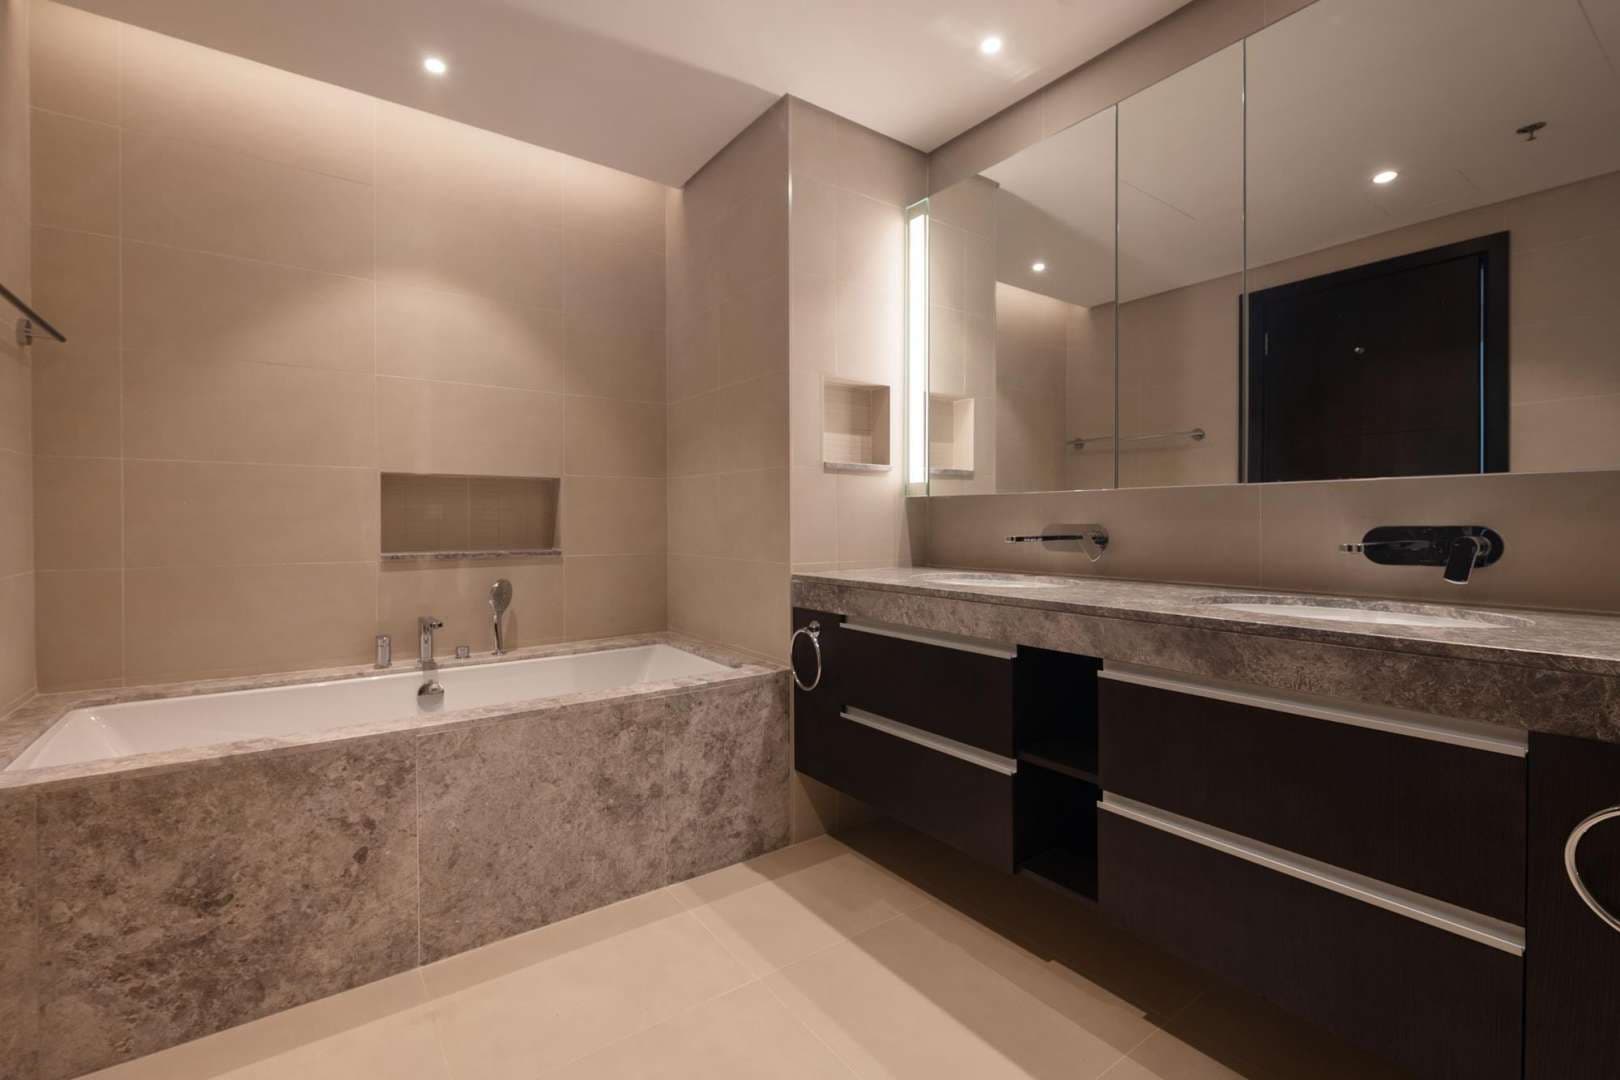 3 Bedroom Apartment For Rent Dubai Creek Residences Lp05248 Ebdda7b15c5c080.jpg